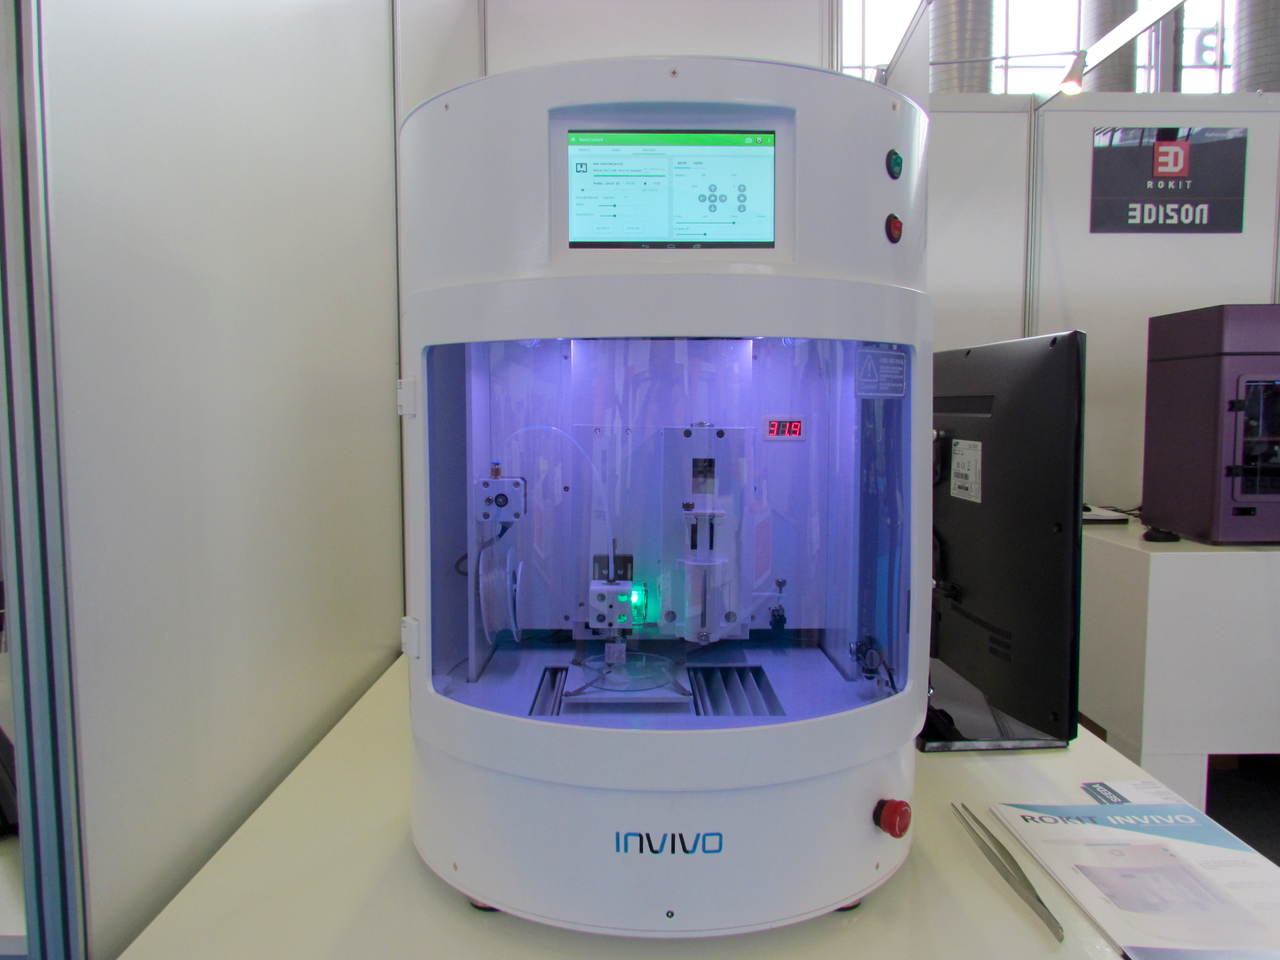  ROKIT's new Invivo 3D bioprinter 